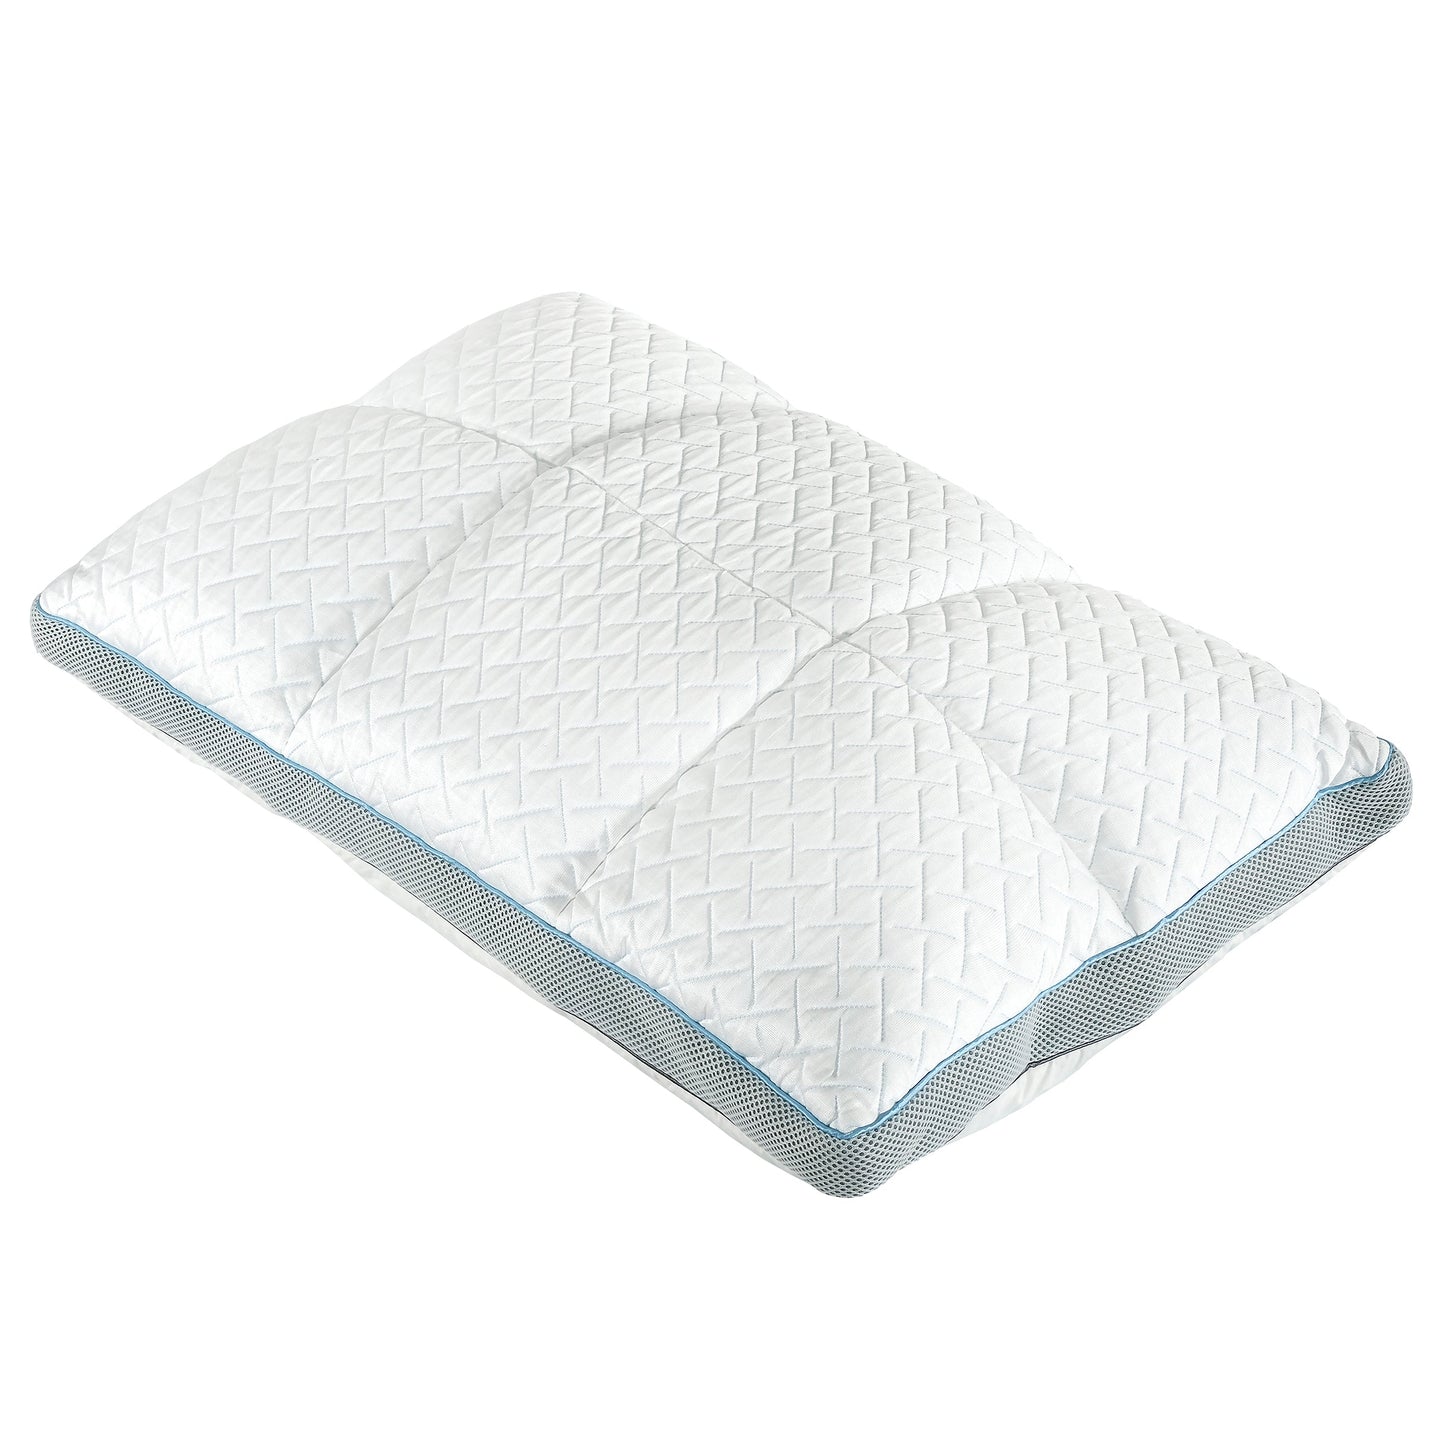 Sofi Sleep Deluxe Memory Foam Pillow